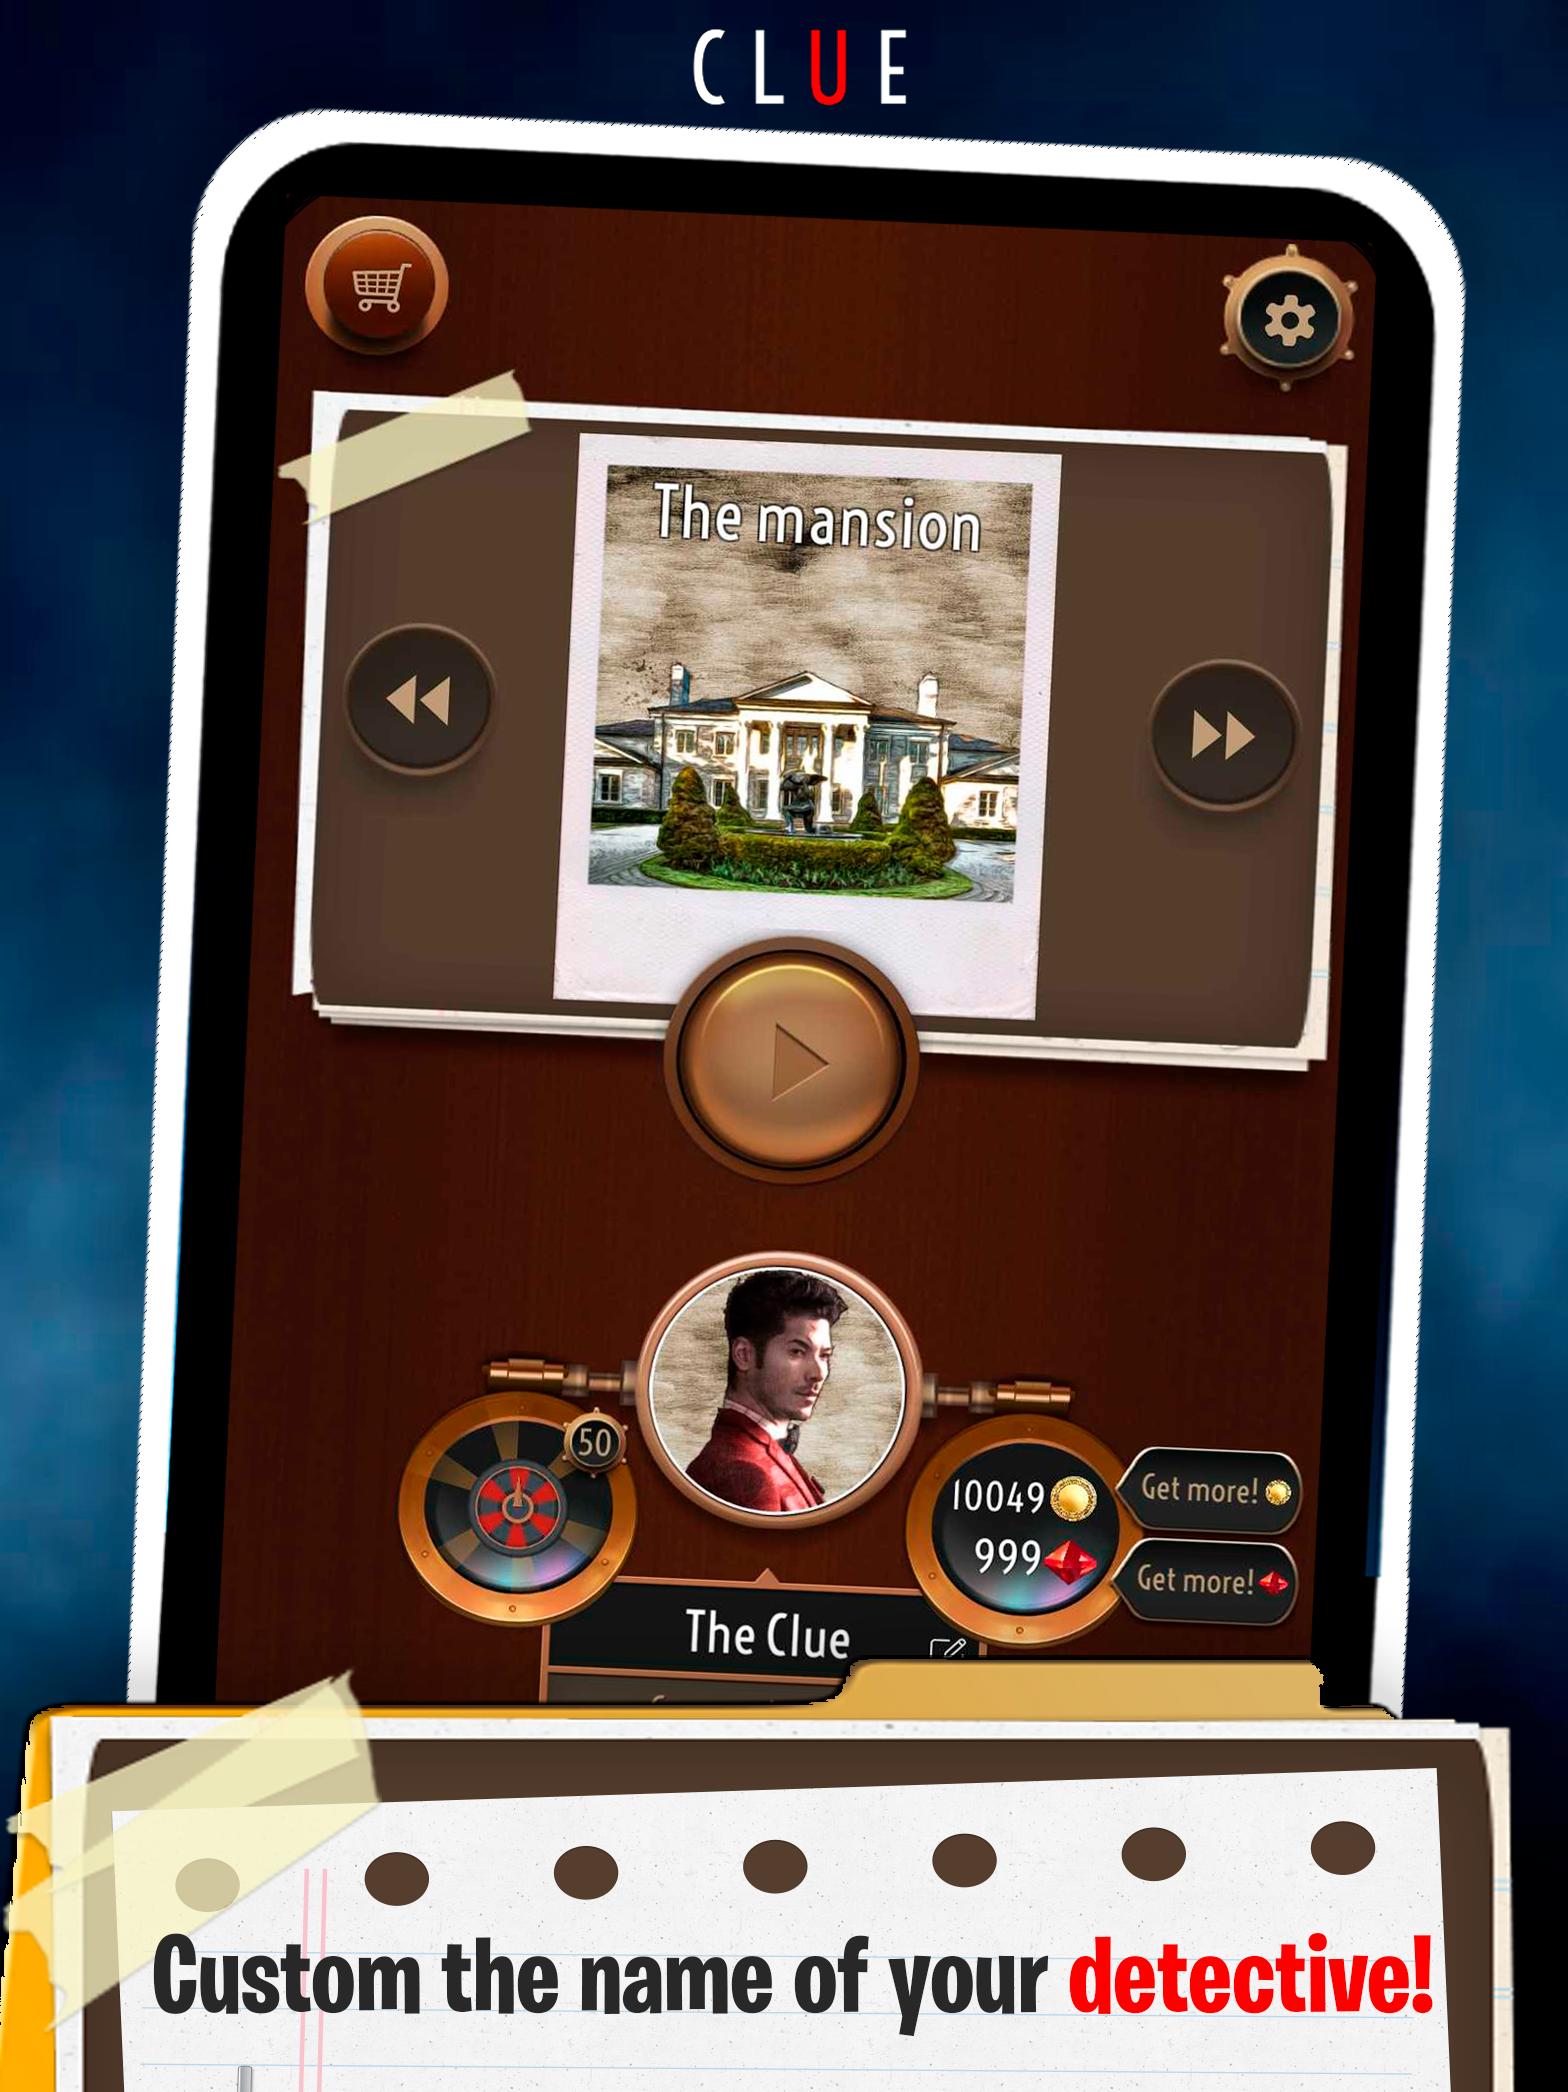 Clue Detective mystery murder criminal board game 2.3 Screenshot 9